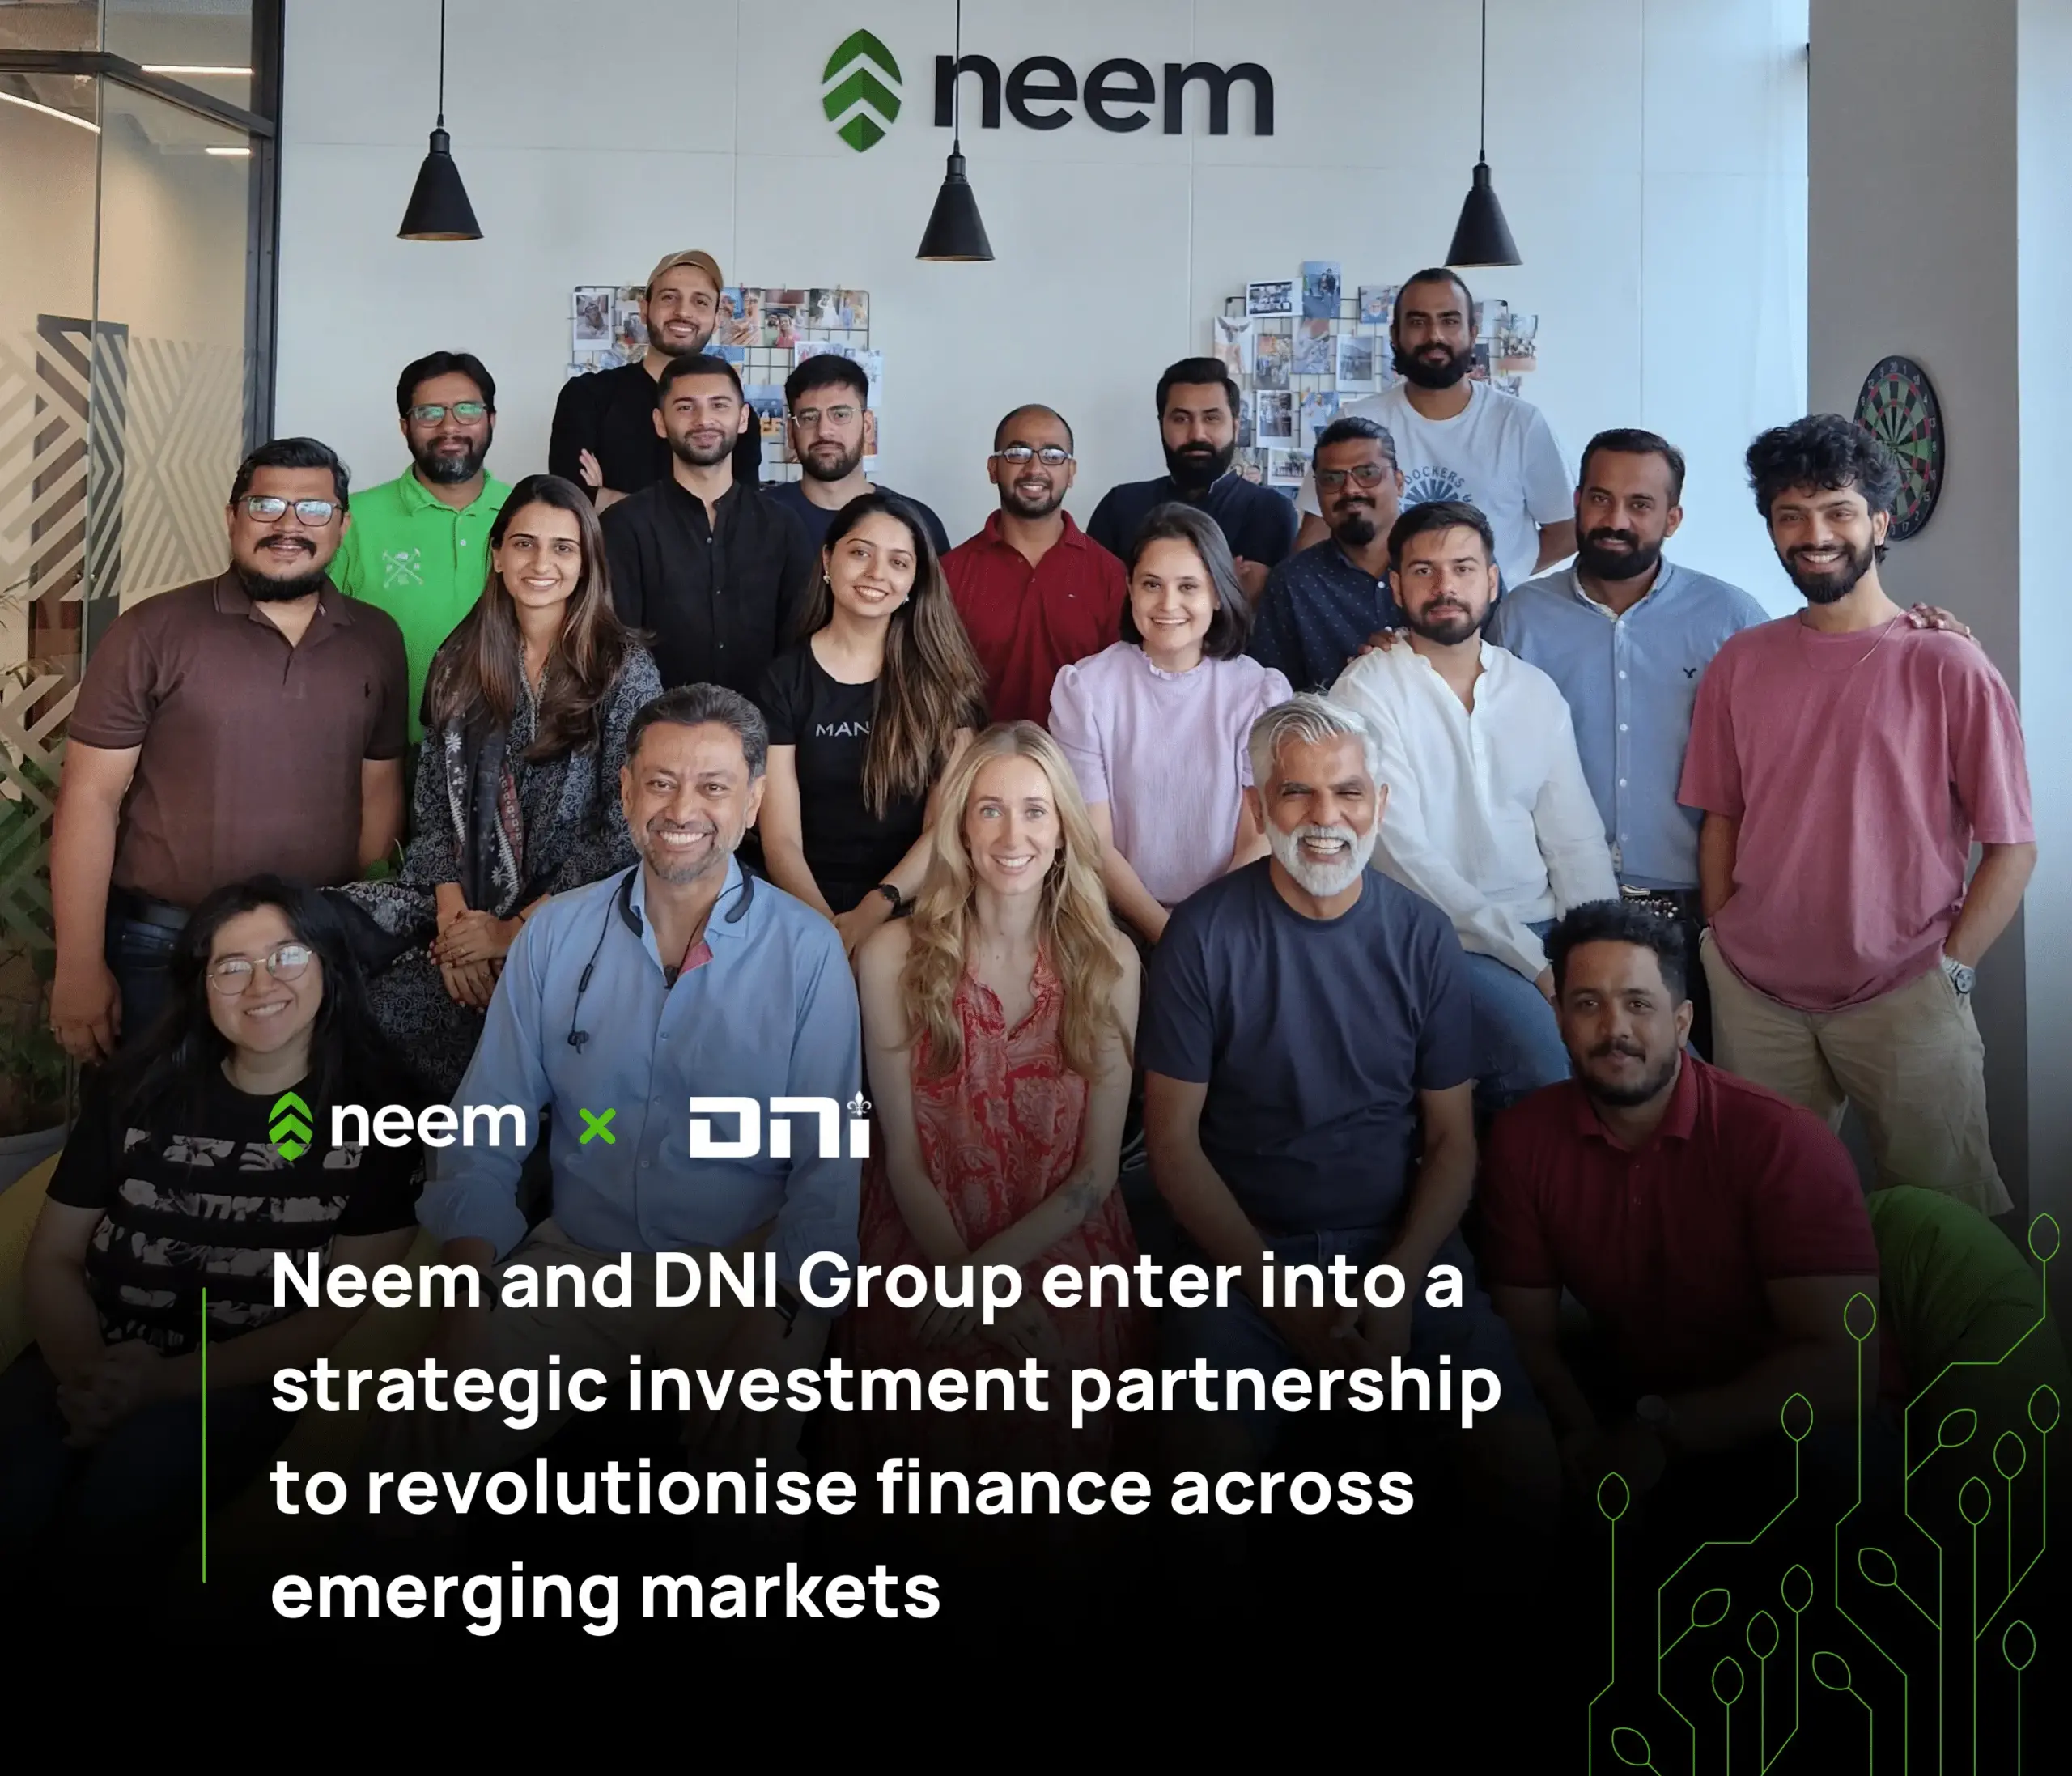 Embedded Finance Platform Neem x DNI Group